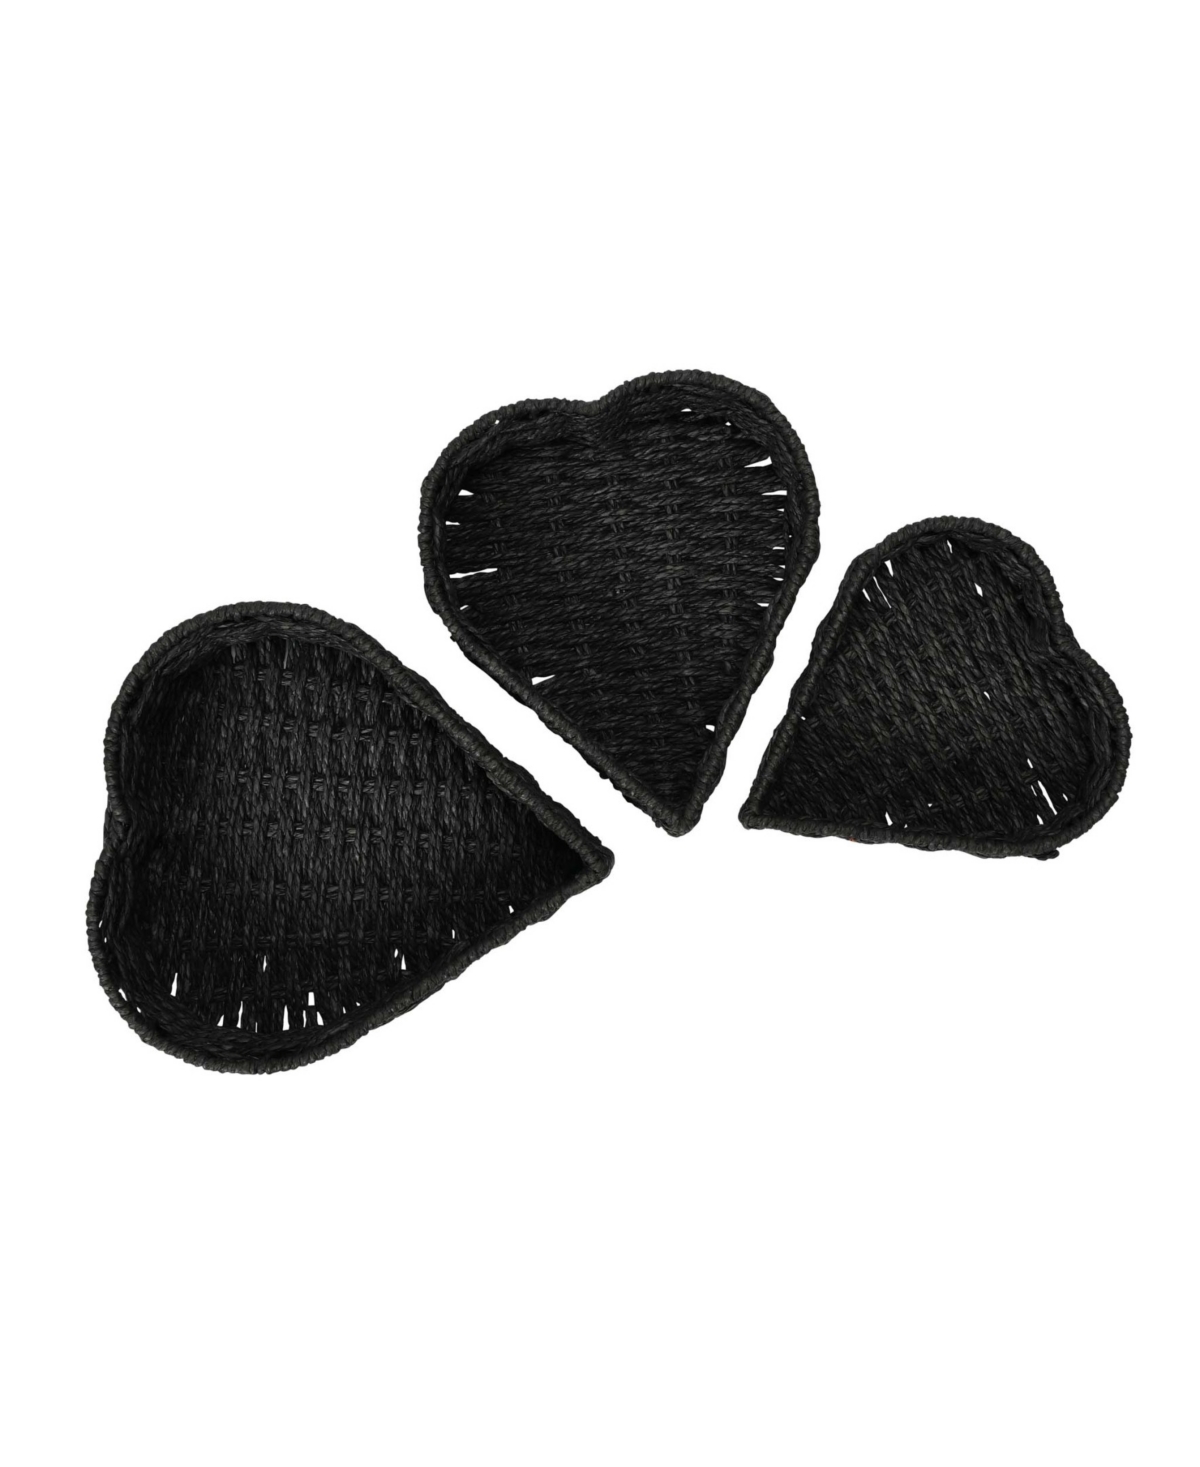 Household Essentials Heart Basket, Set Of 3 In Black